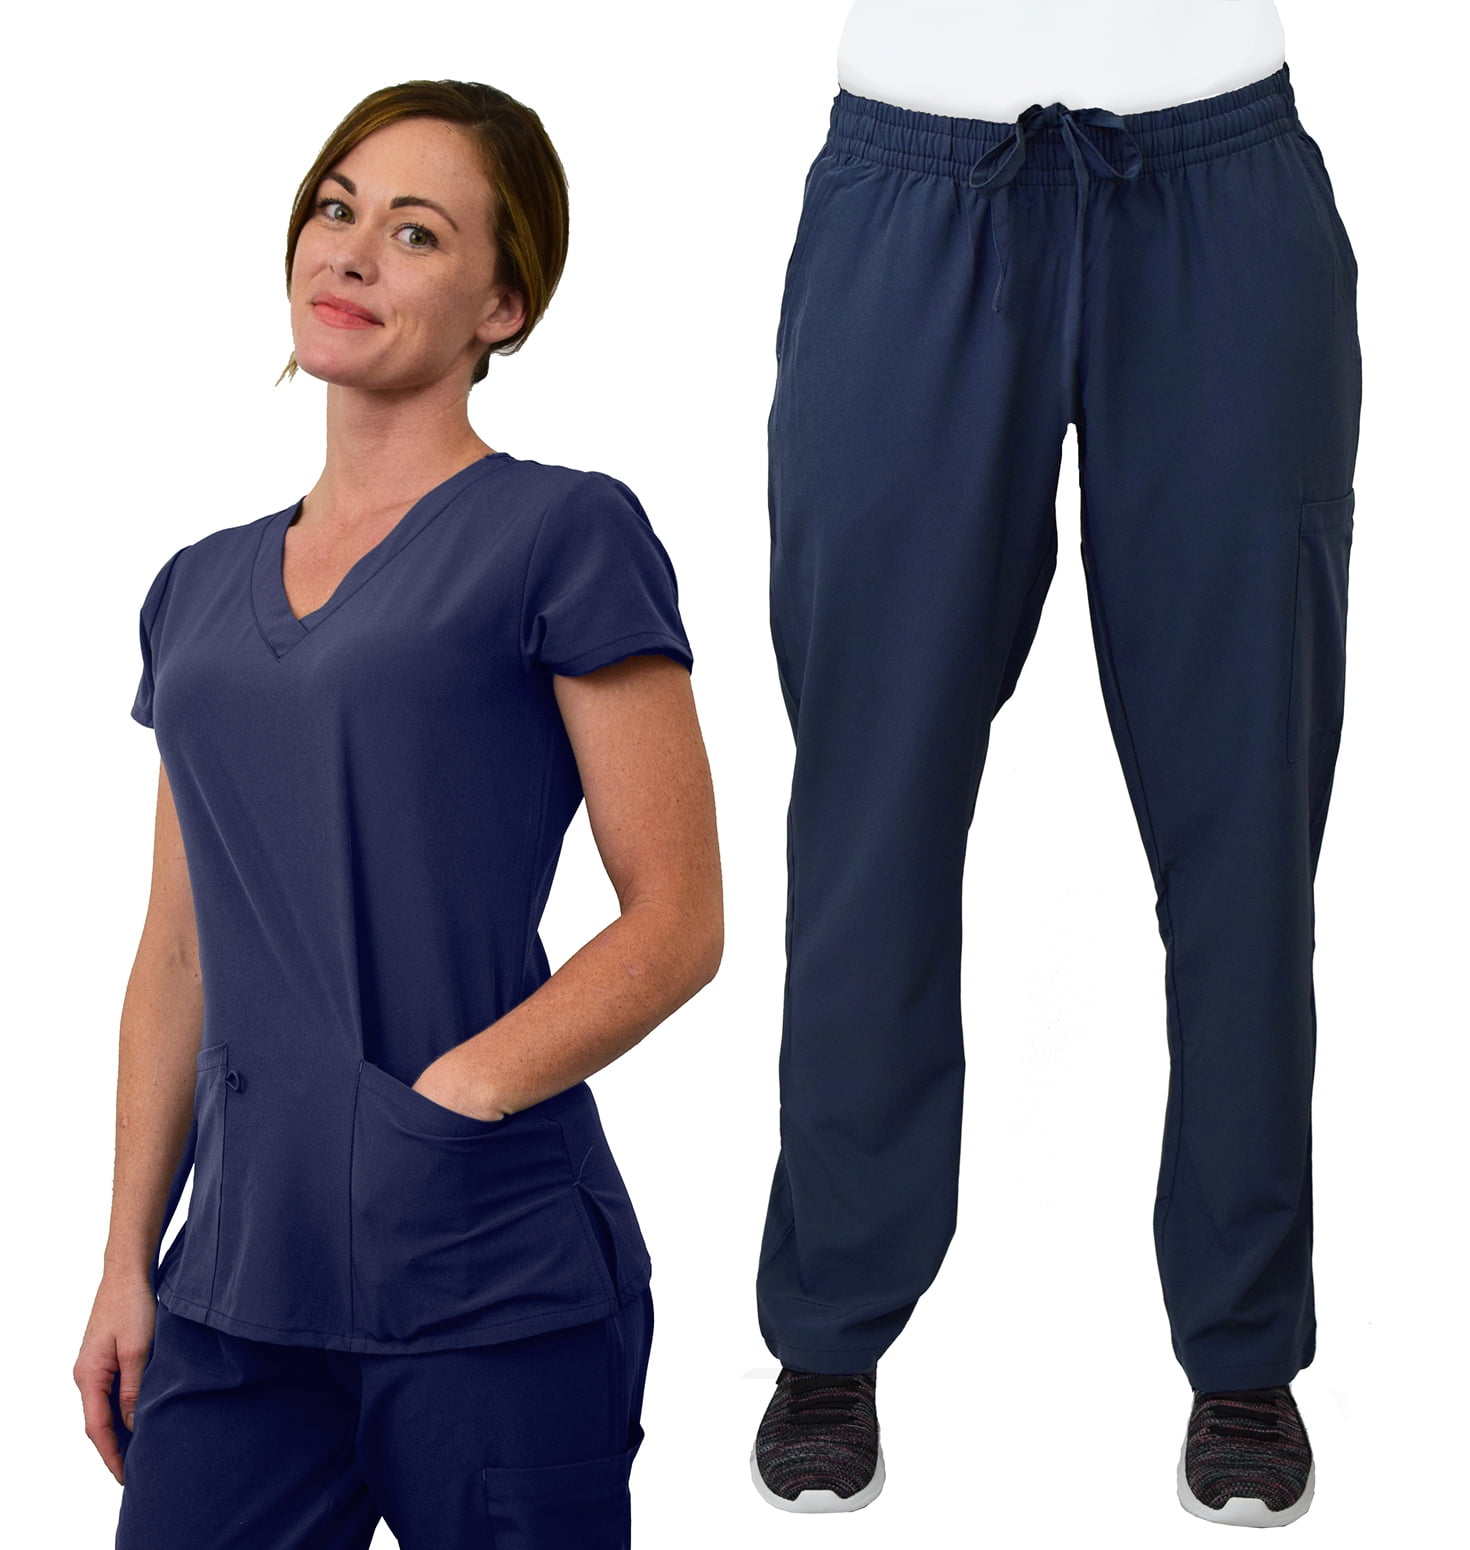 Womens Medical Scrub Set GT 4FLEX Vneck Top and Pant-Indigo-S Walmart.com